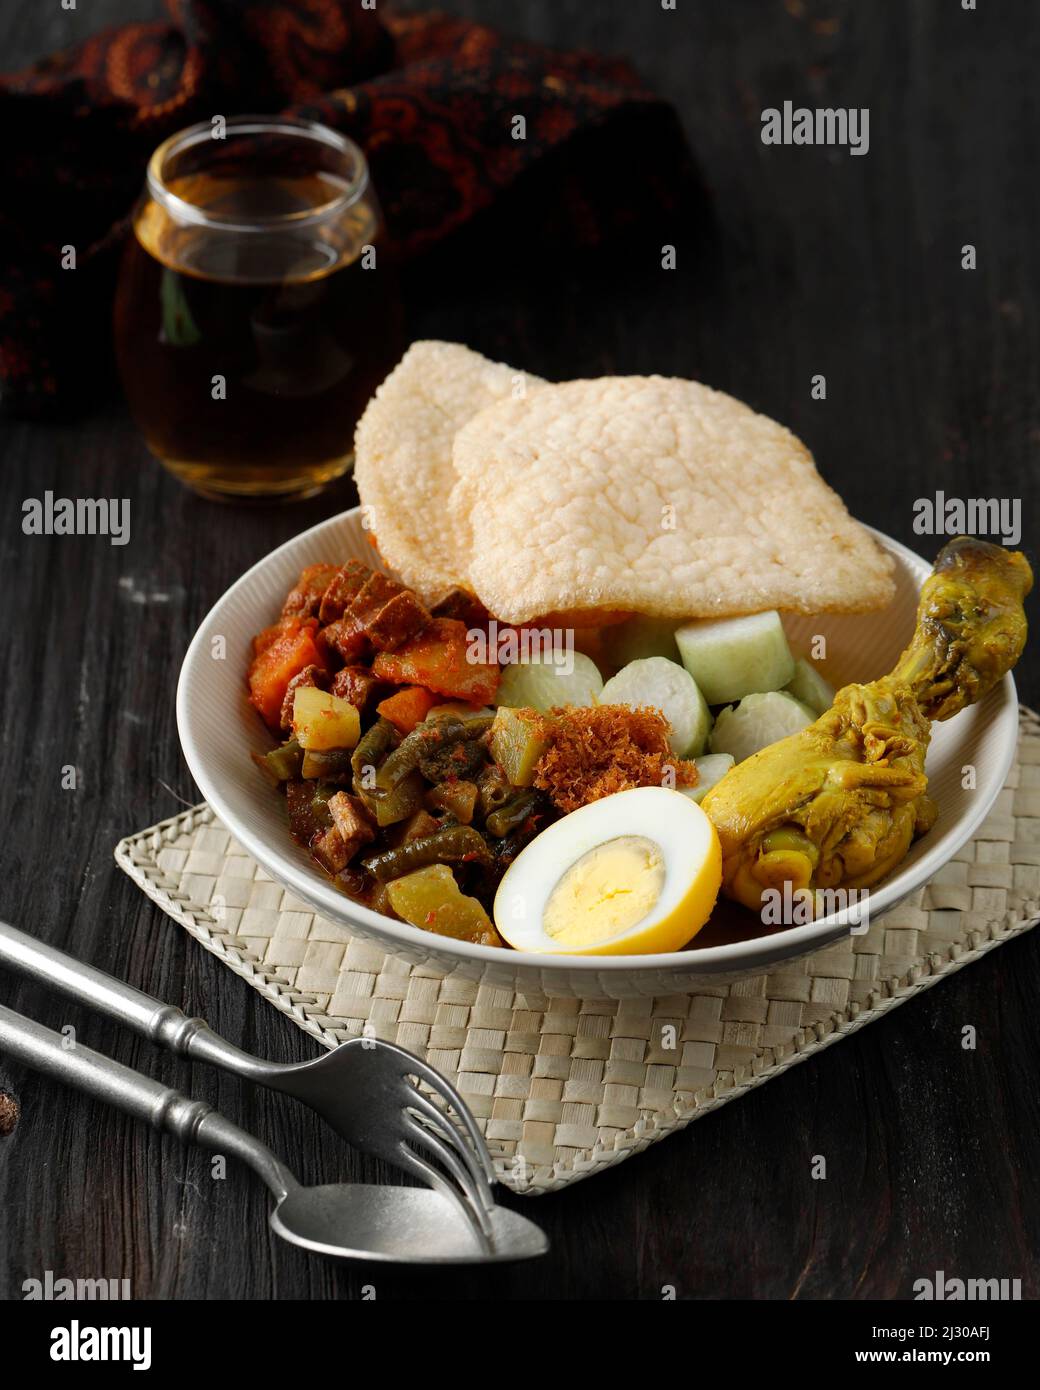 Ketupat Sayur or Lontong Sayur Lebaran Komplit, Dish usually Served during Ramadhan or Idul Fitri. On Wooden Table, Served with Tea Stock Photo